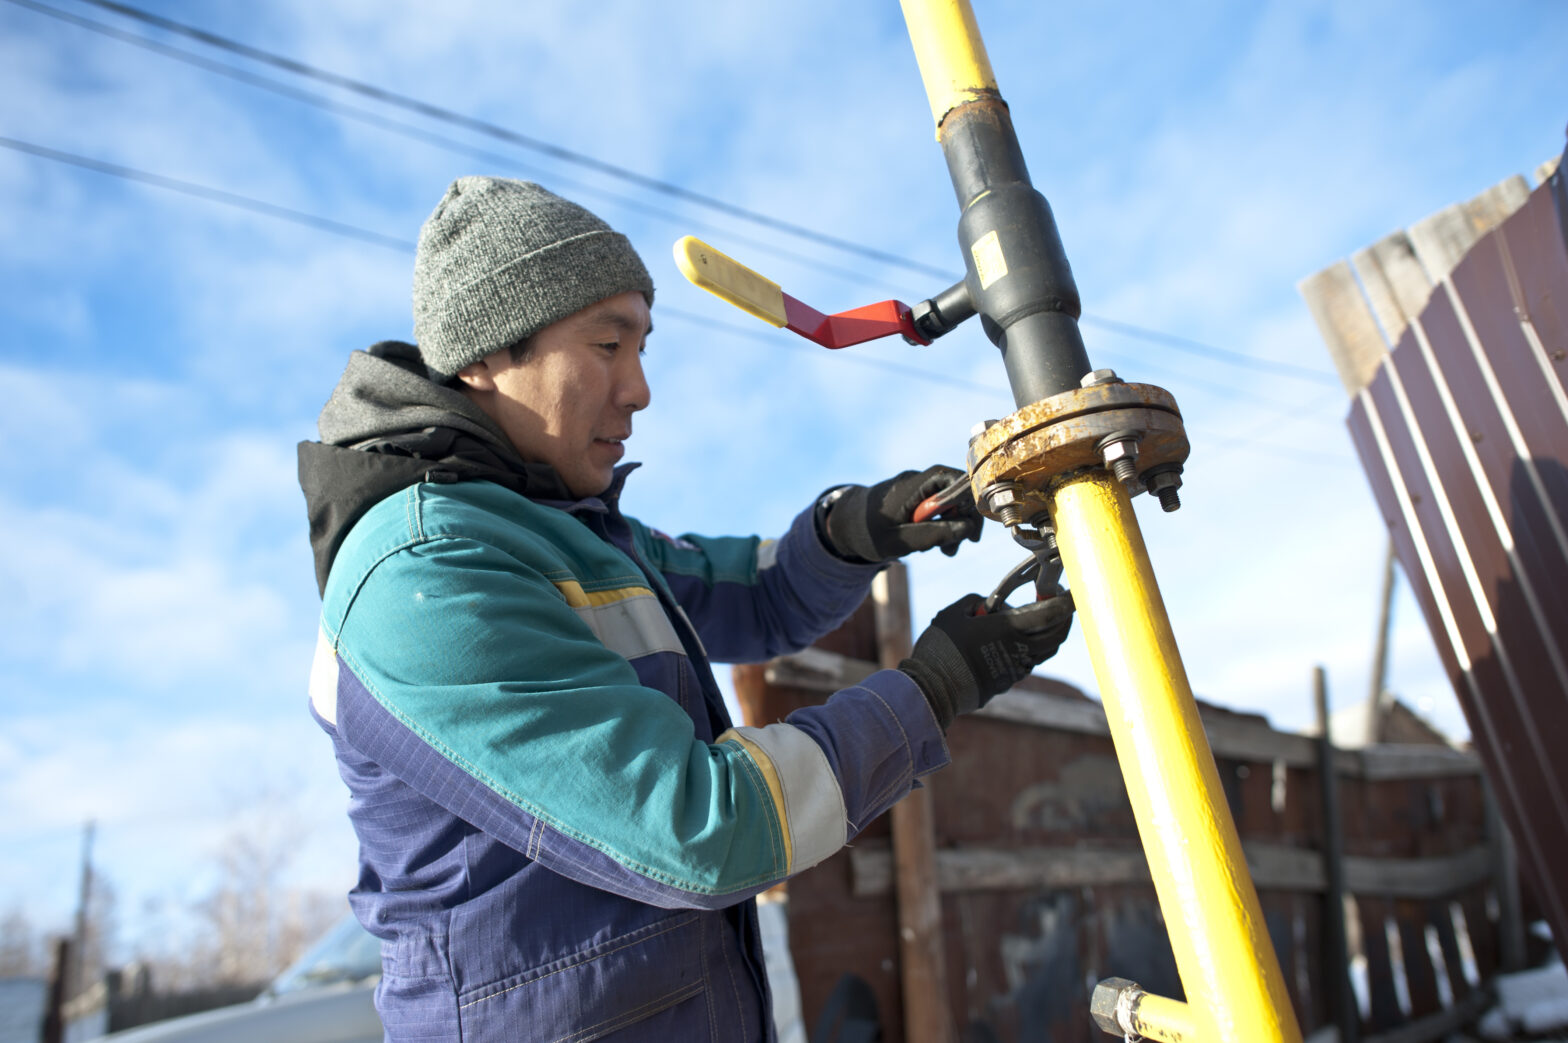 Более 180 семьям оплатили газификацию дома за счет бюджета Якутии